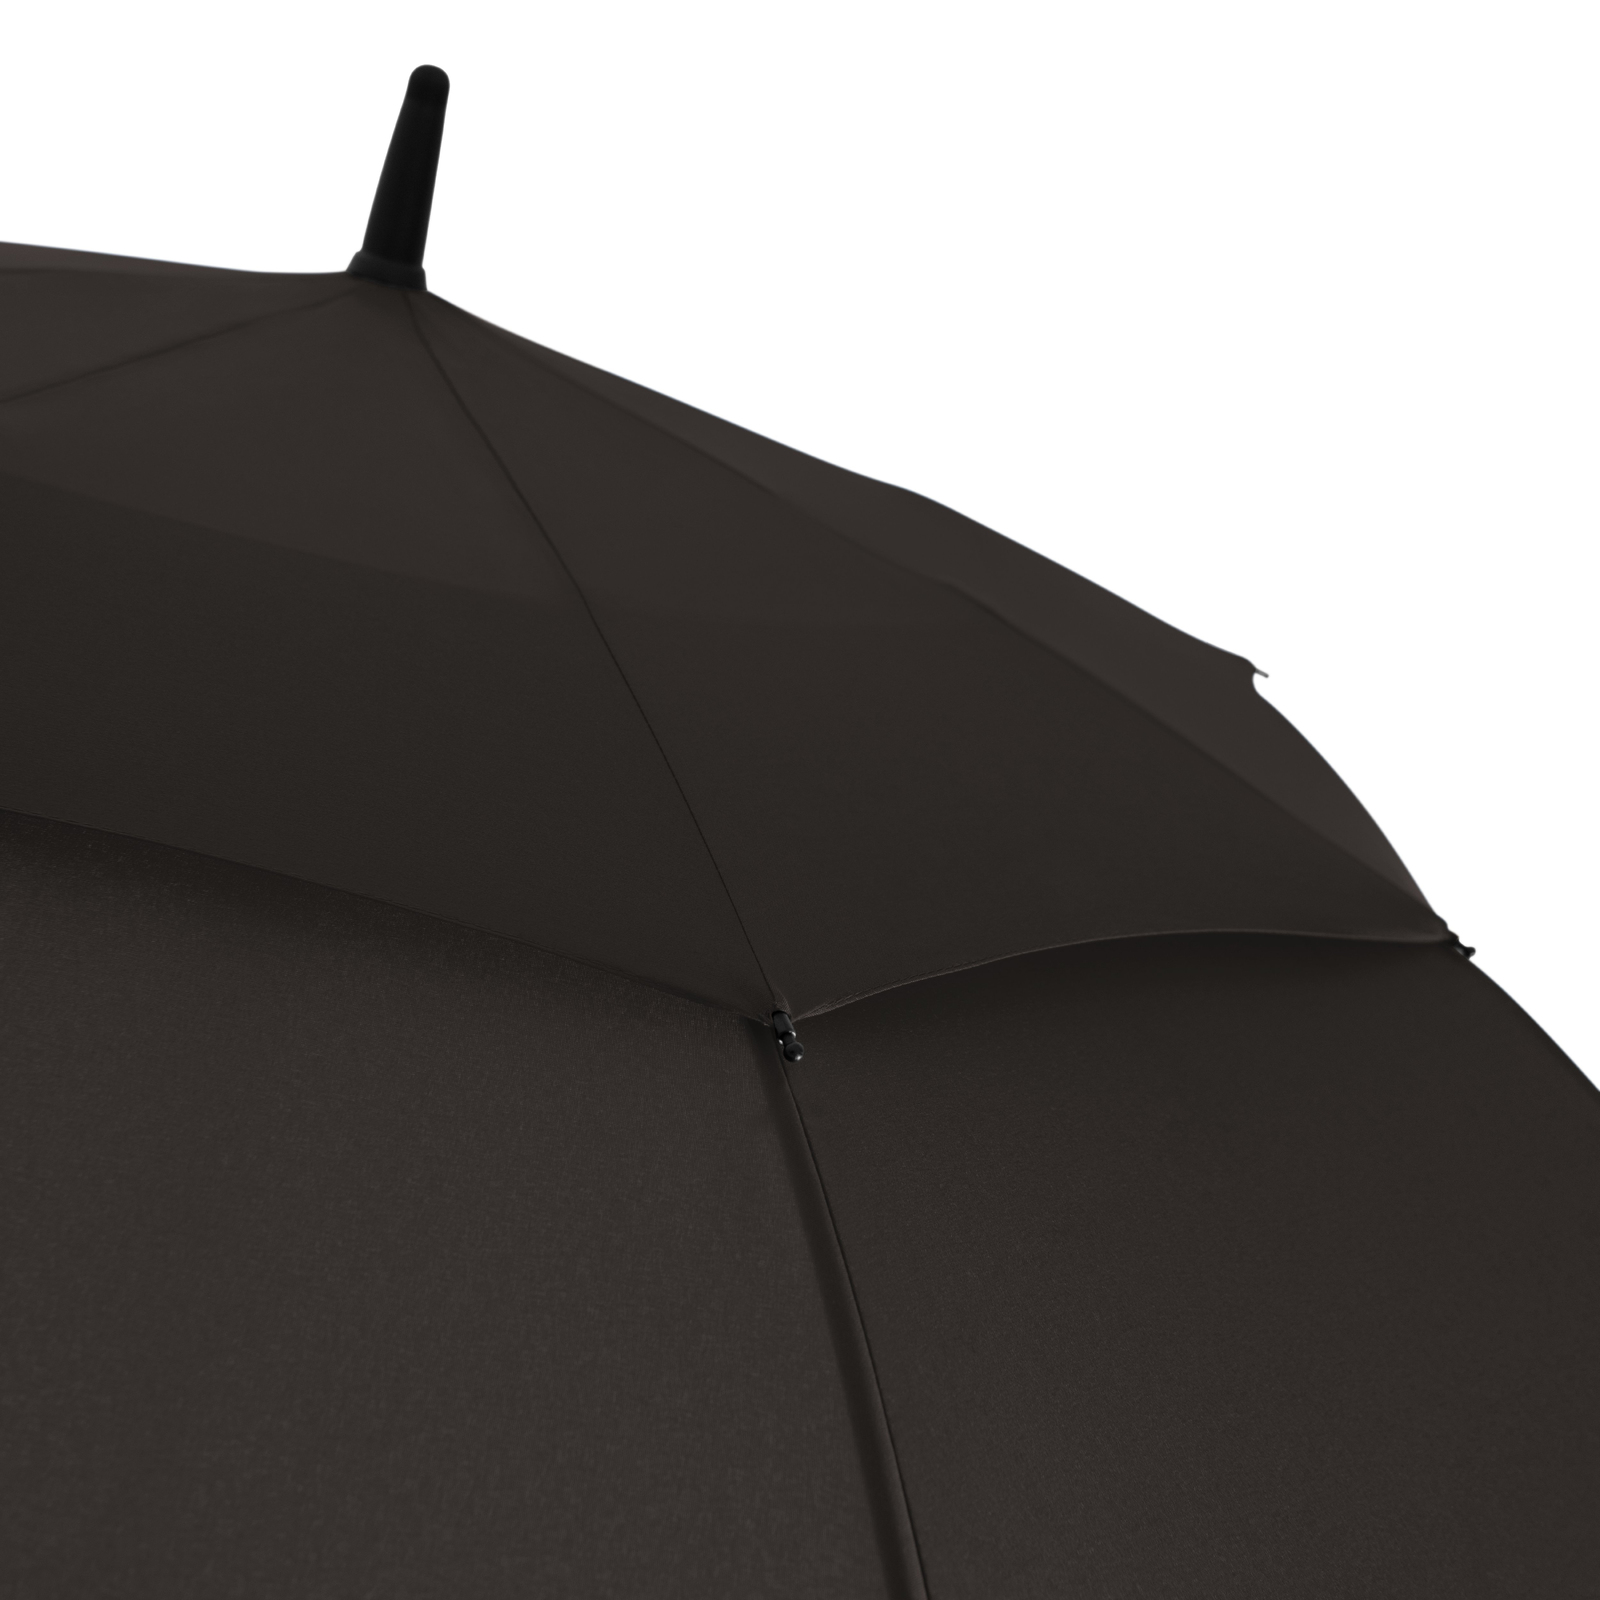 Umbrella Golf Black Doppler Air